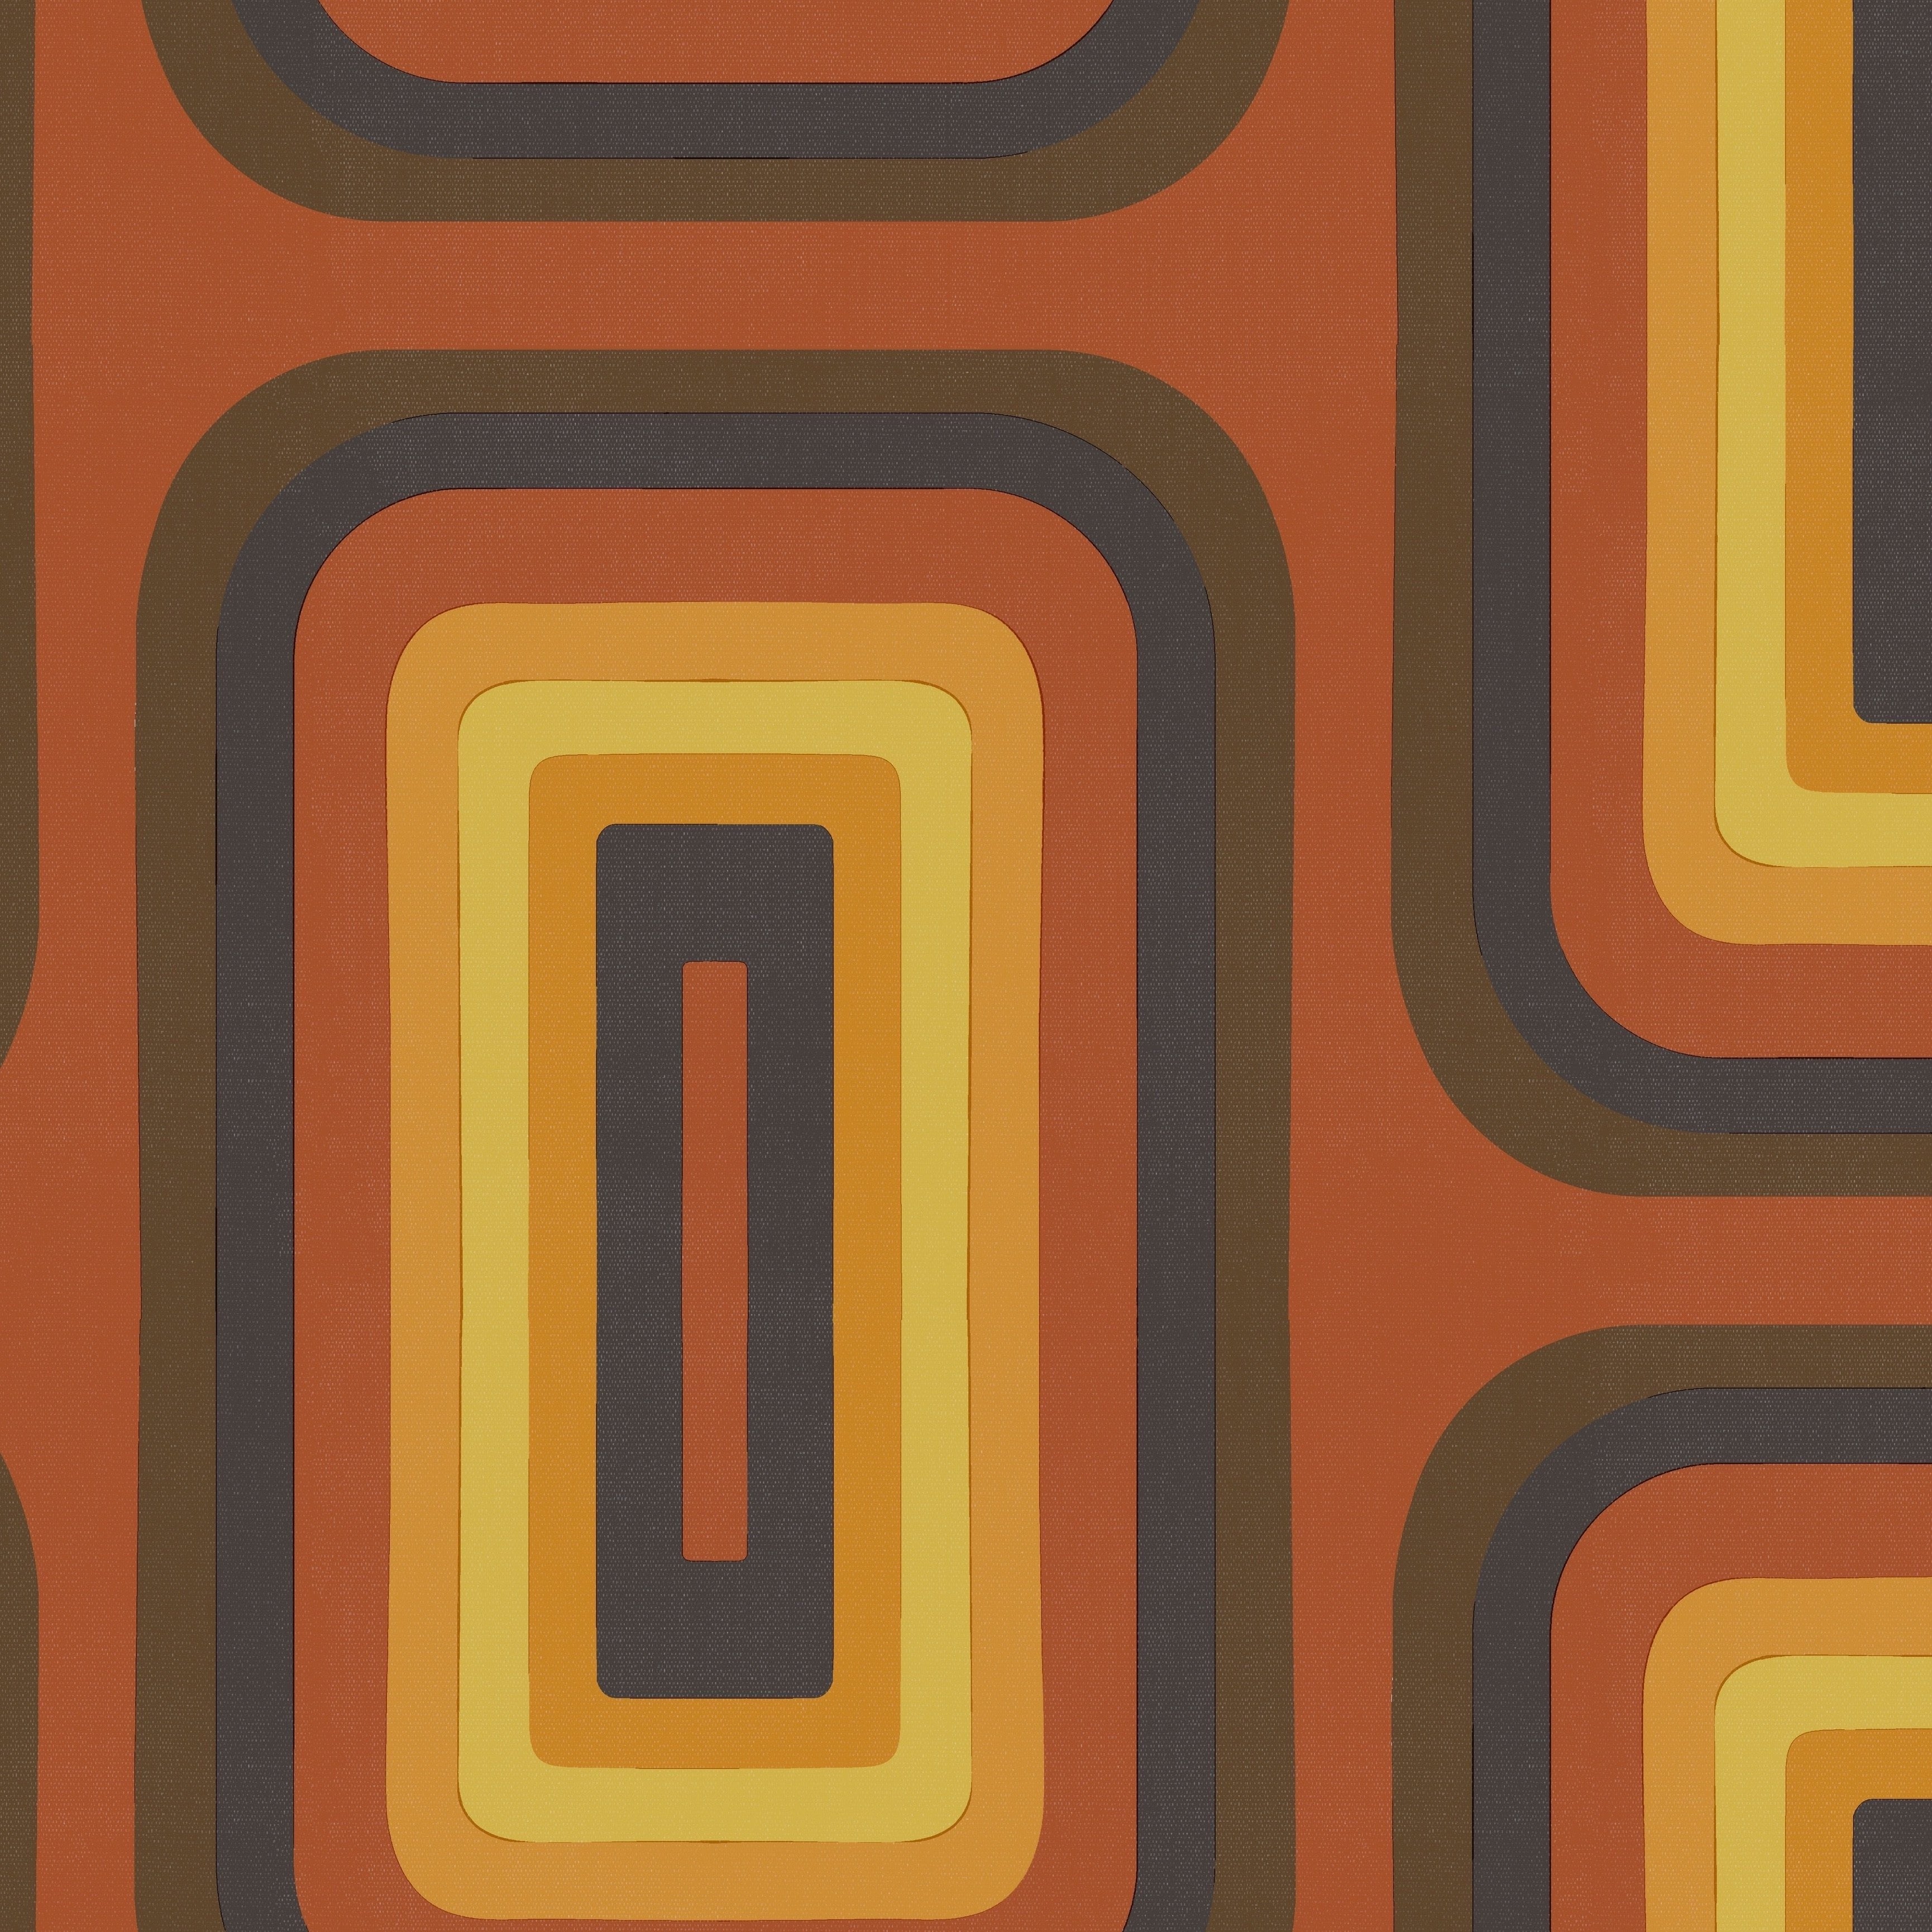 Retro Oblong Geometric wallpaper - Terracotta  + Yellow